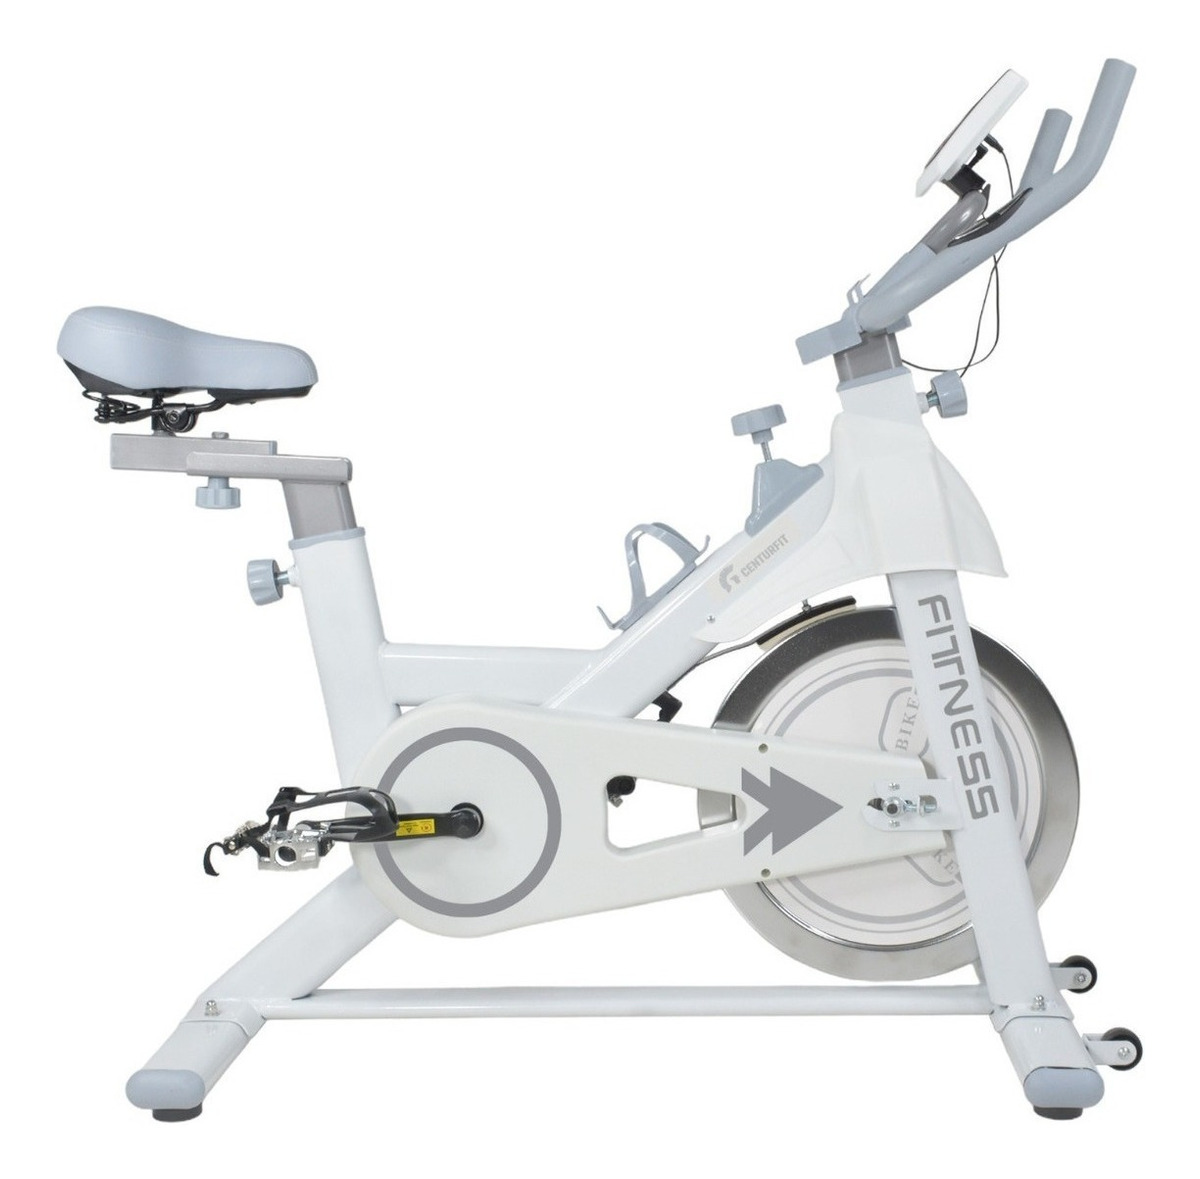 Bicicleta fija Centurfit MKZ-BICSPIN11BLA para spinning color blanco y gris